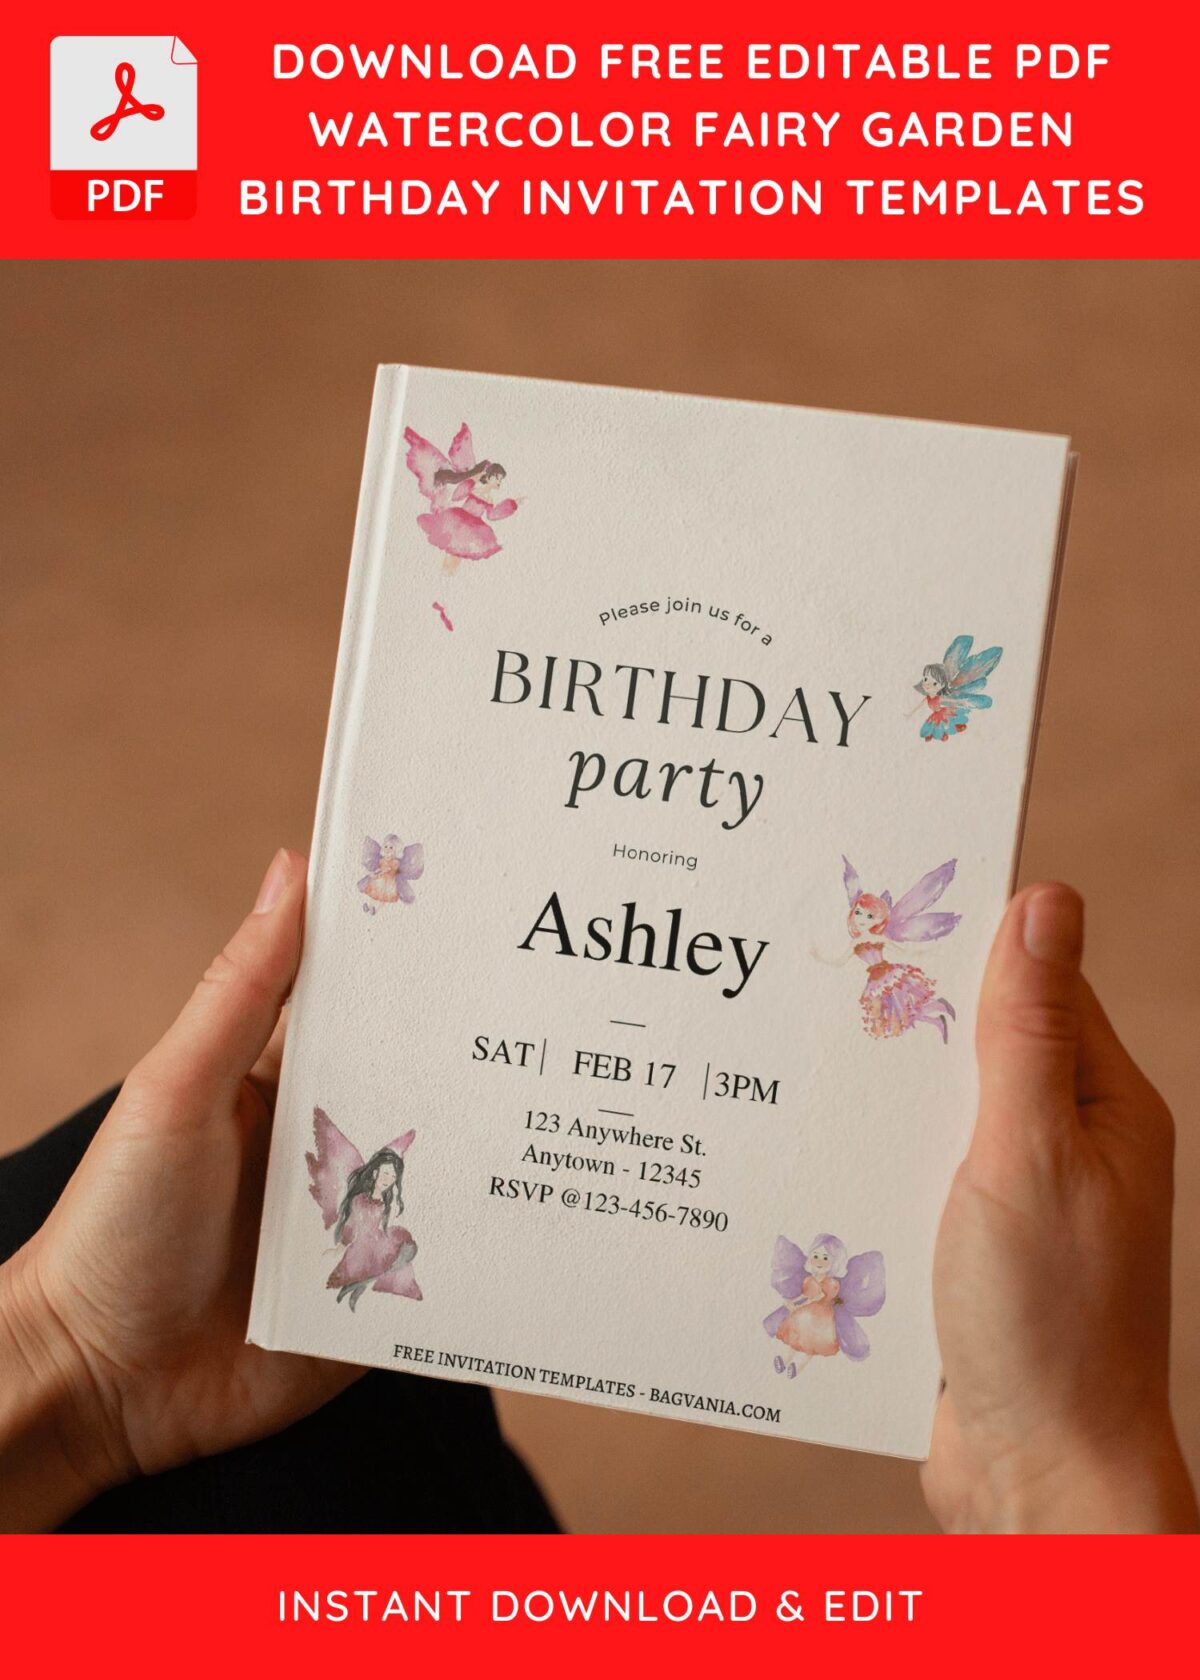 (Free Editable PDF) Simply Cute Watercolor Fairy Birthday Invitation Templates E